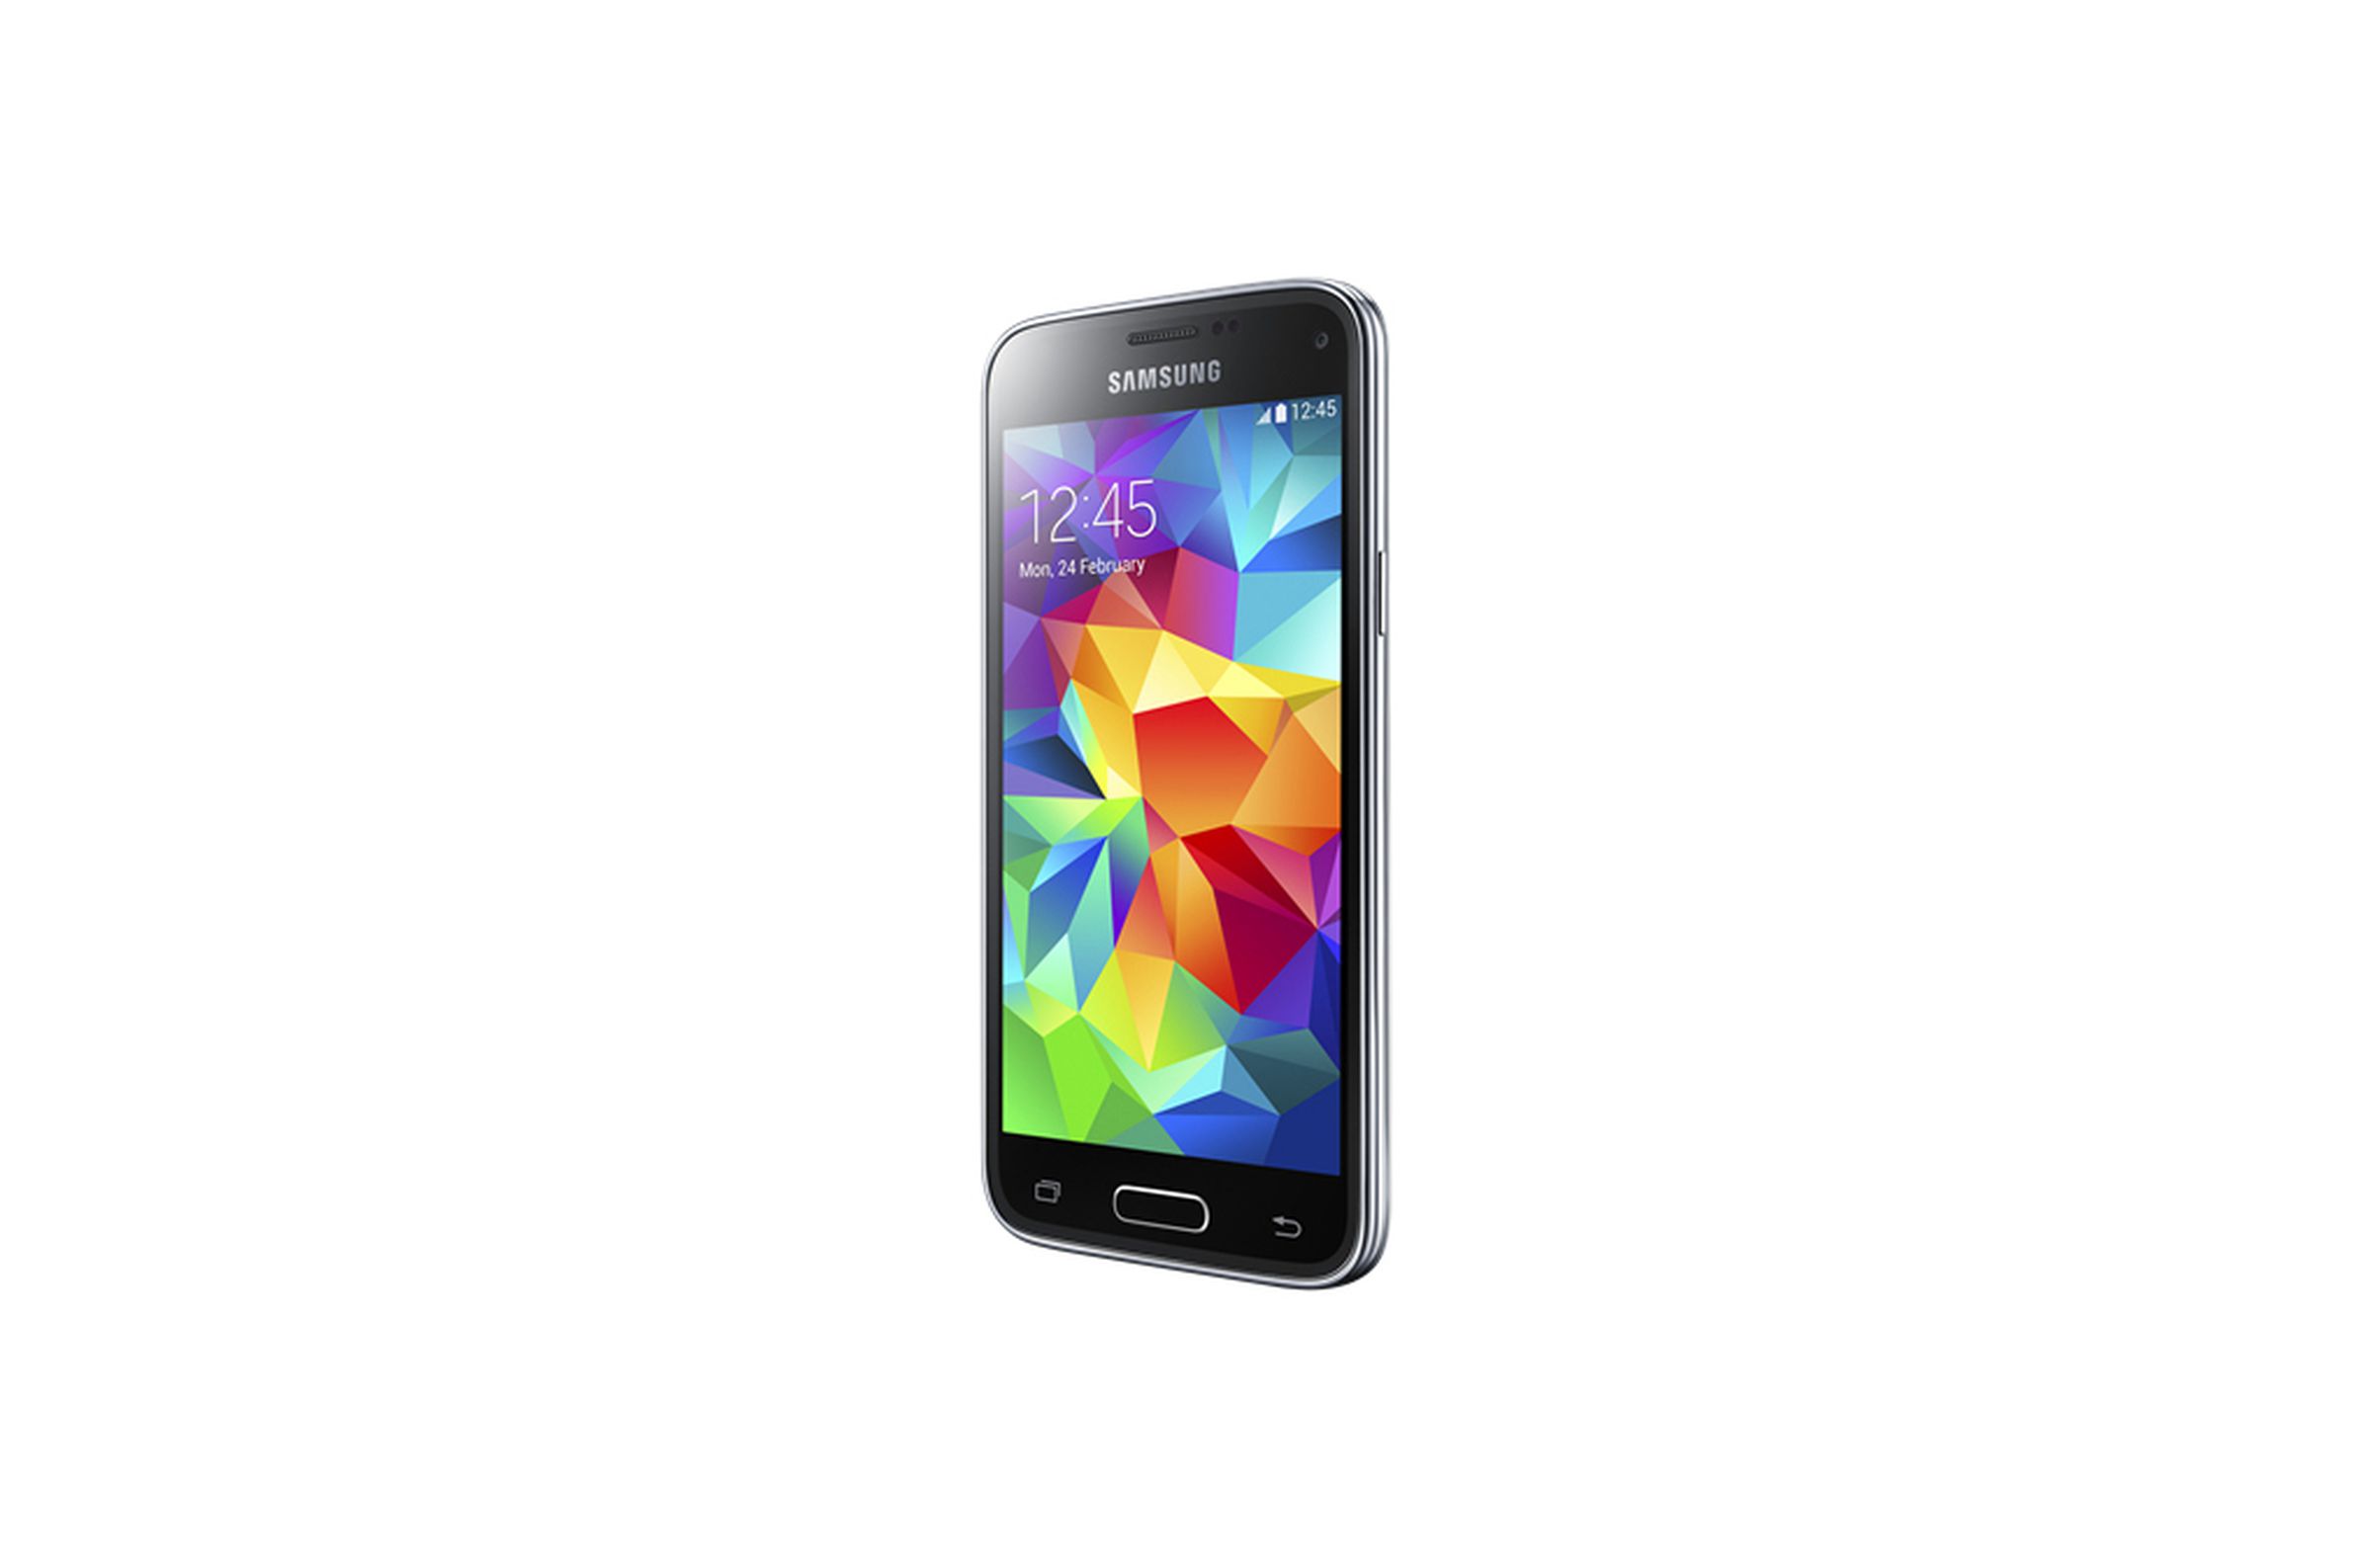 Samsung Galaxy S5 mini press photos